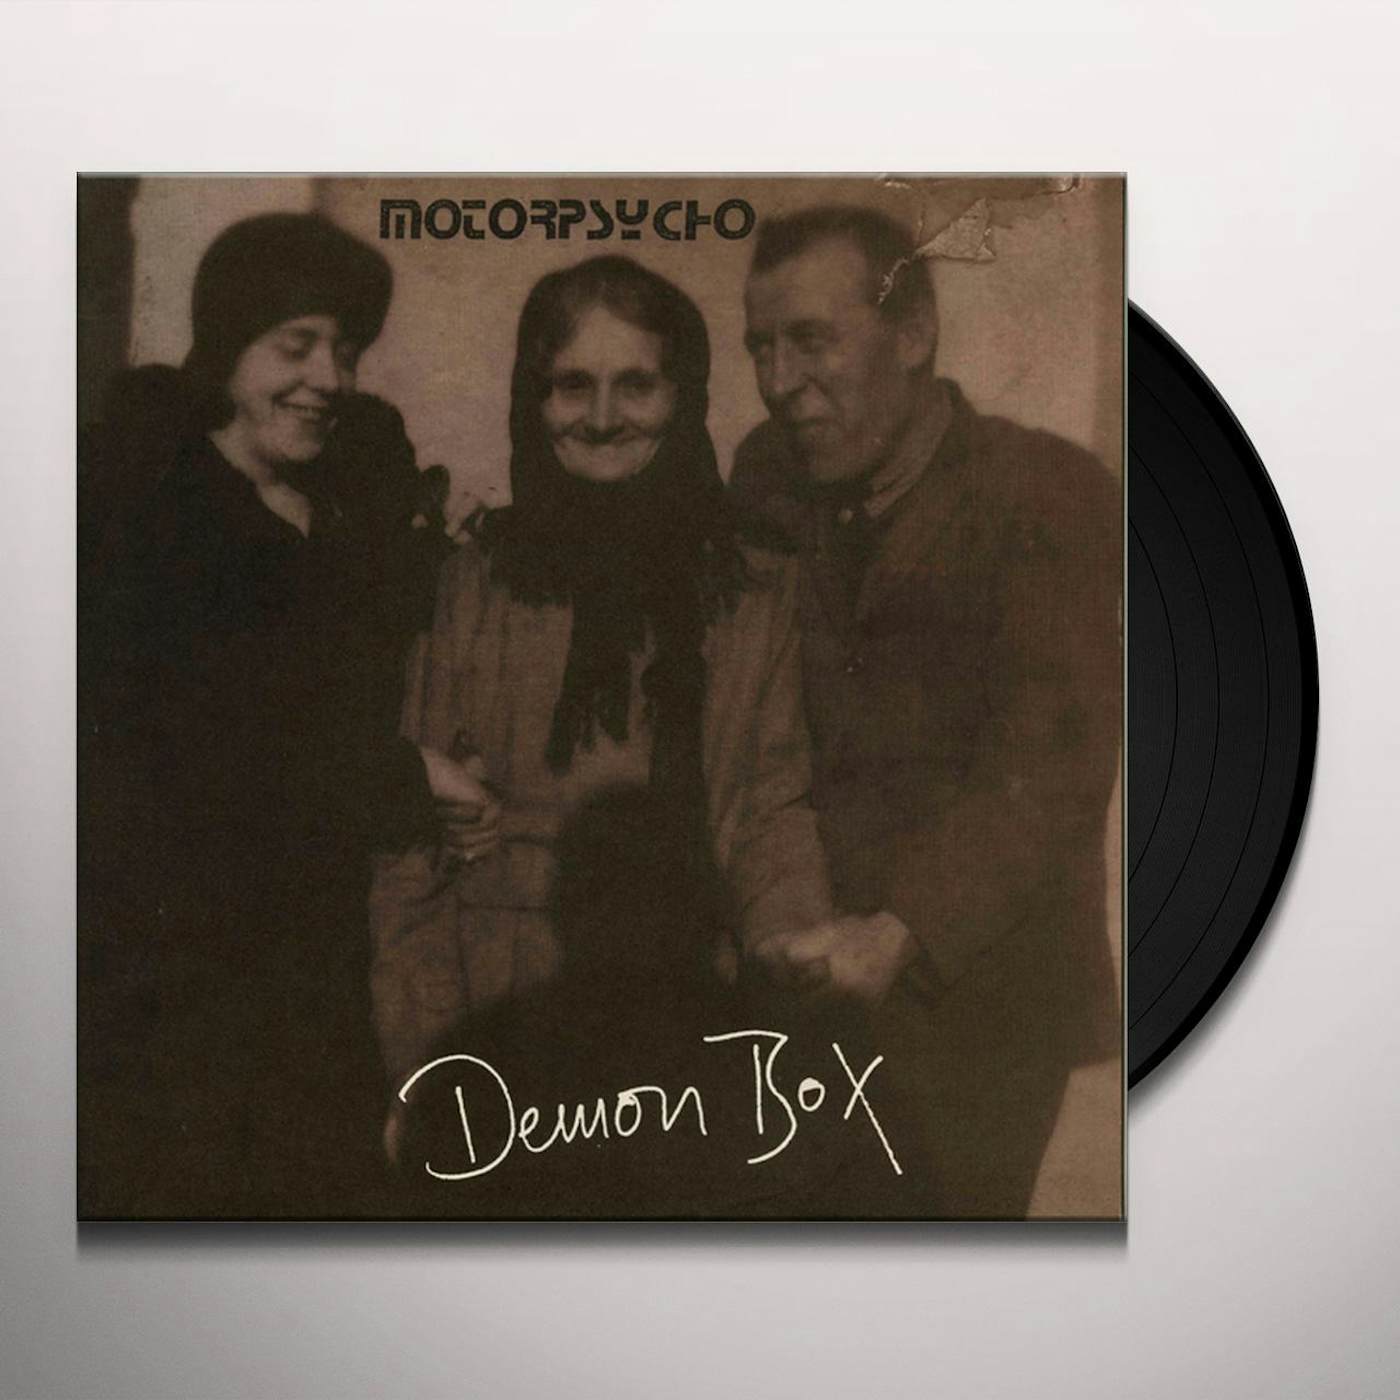 Motorpsycho Demon Box Vinyl Record